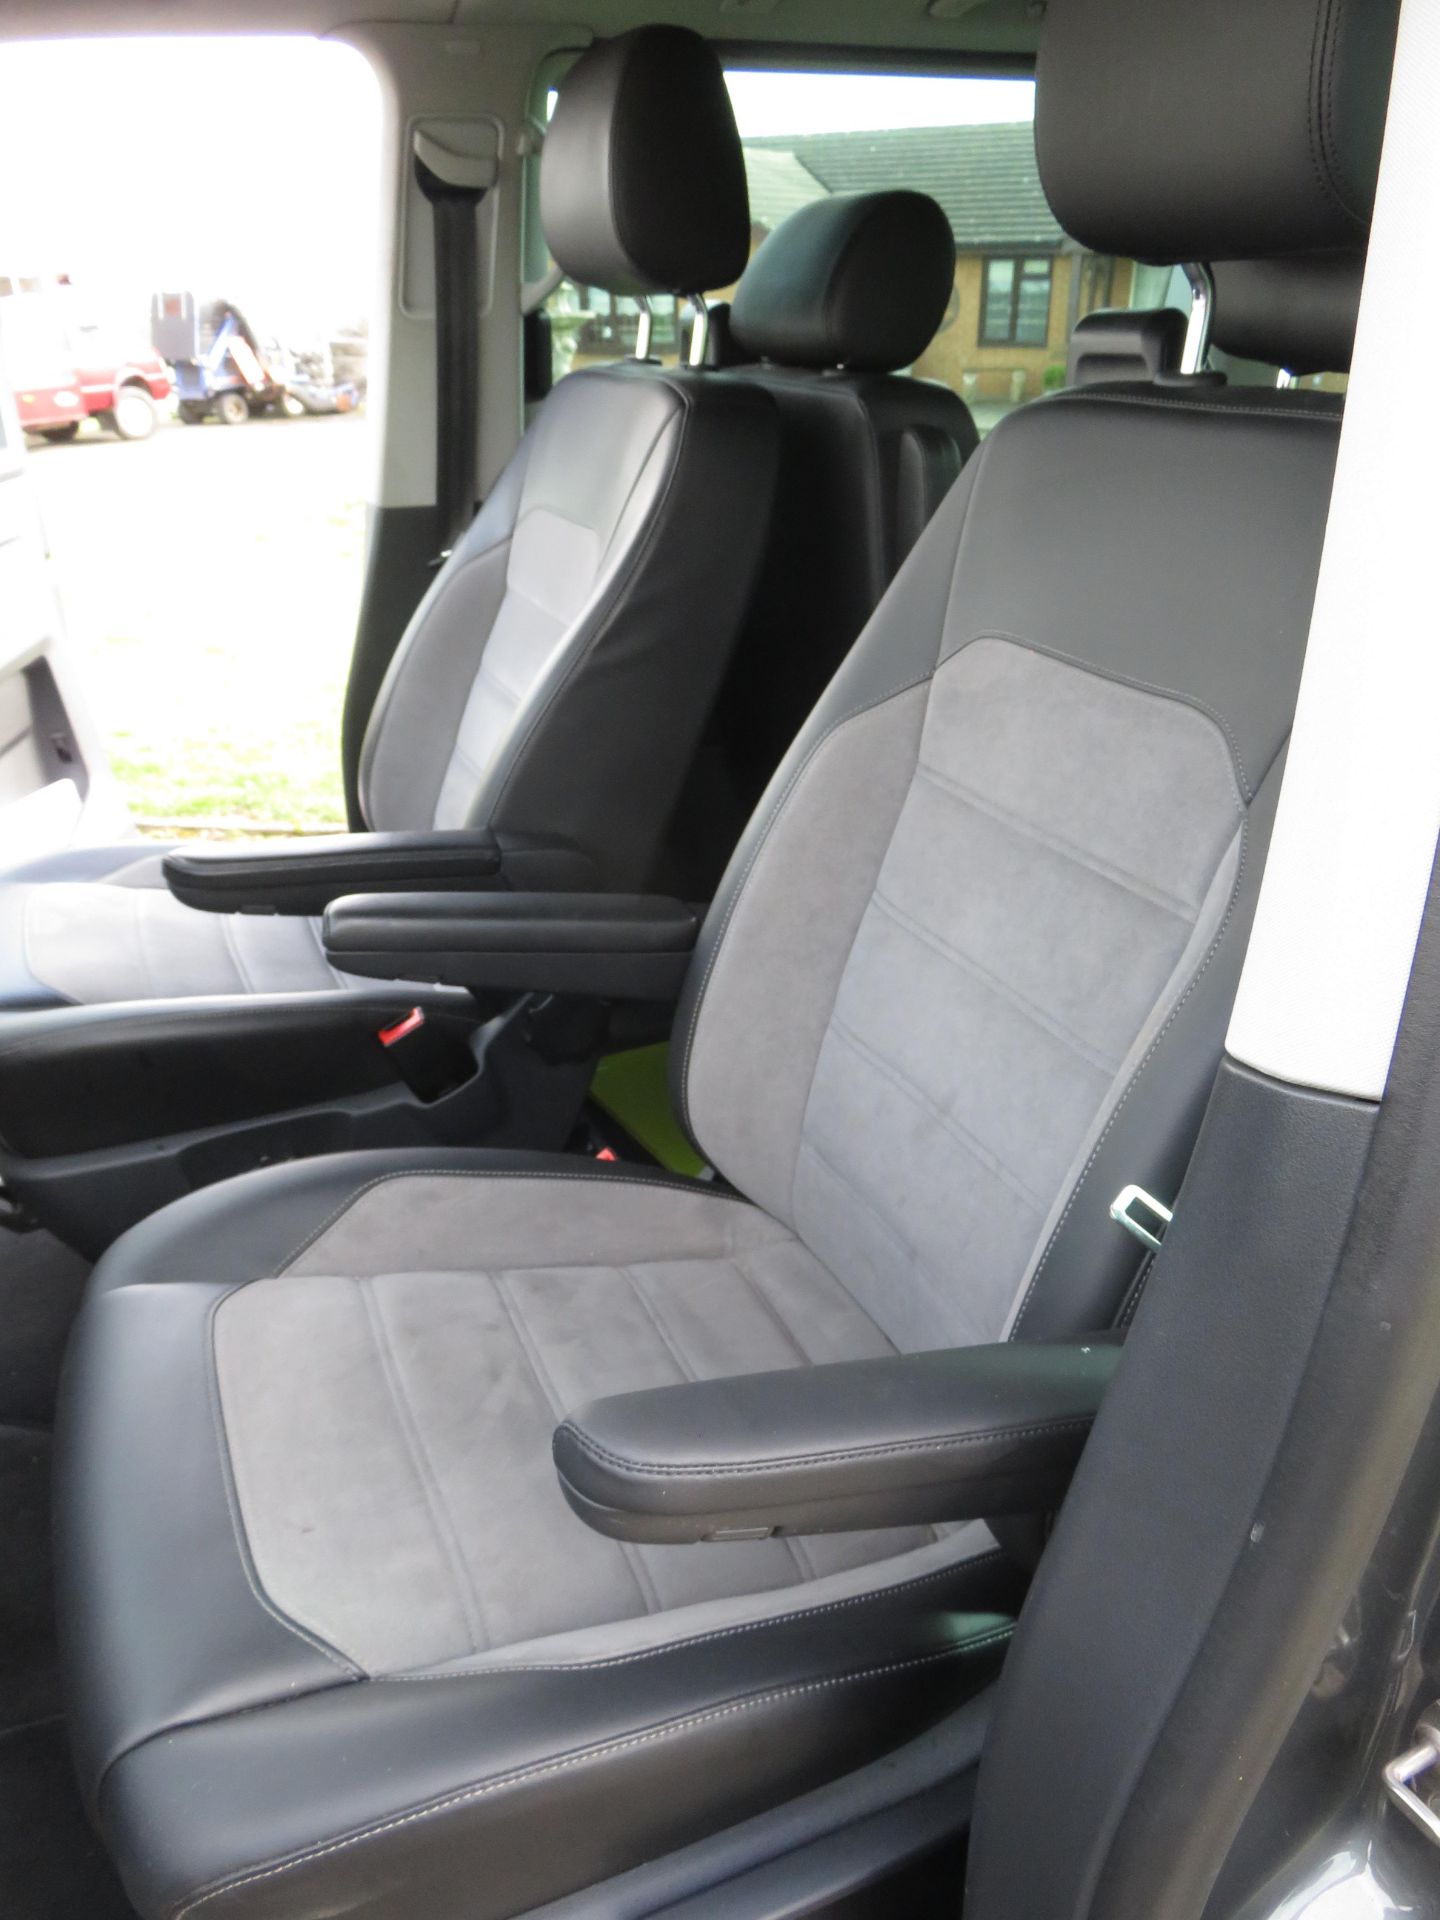 1 Volkswagen Caravelle 2.0 TDI (150PS) Executive BMT SNB DSG 7 Seat Five Door MPV - Image 17 of 17